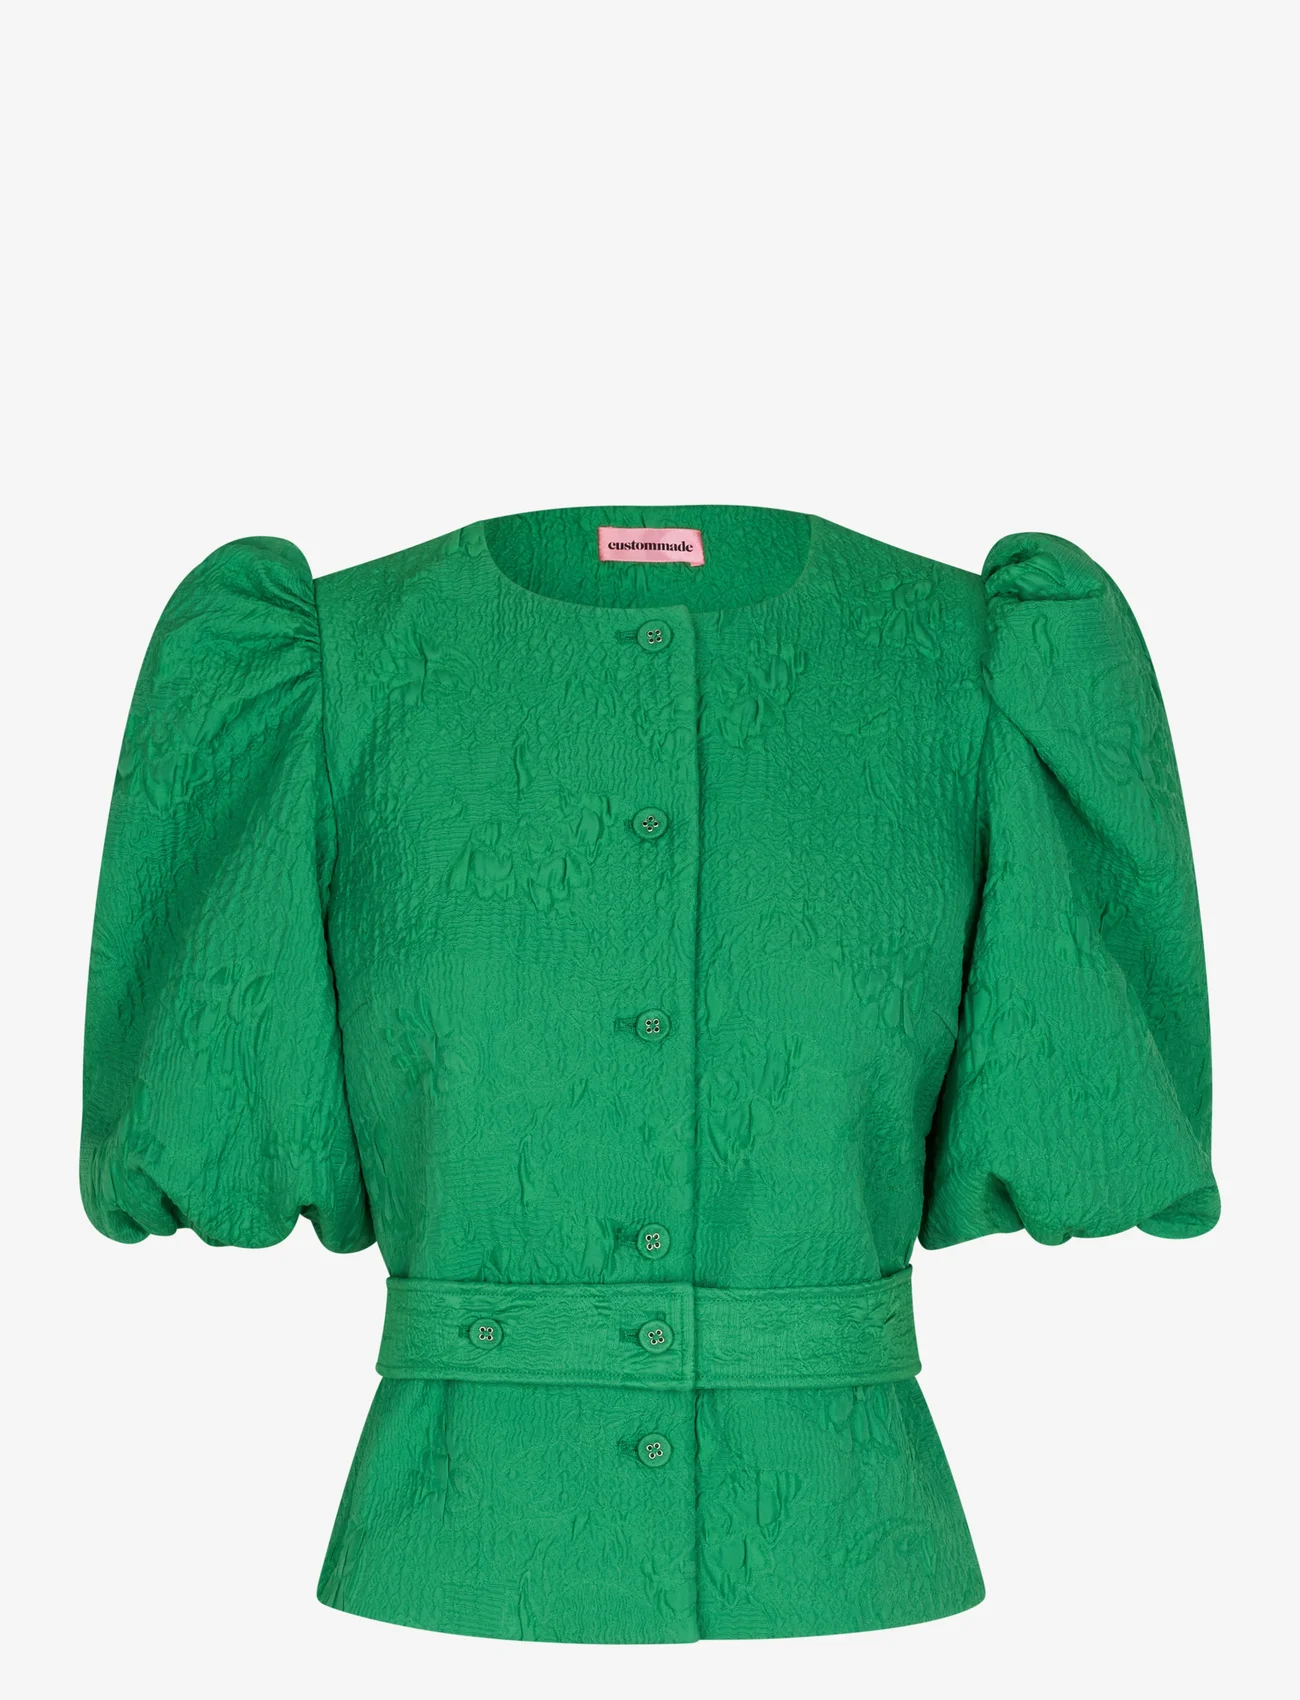 Custommade - Skyla - short-sleeved blouses - 311 kelly green - 0